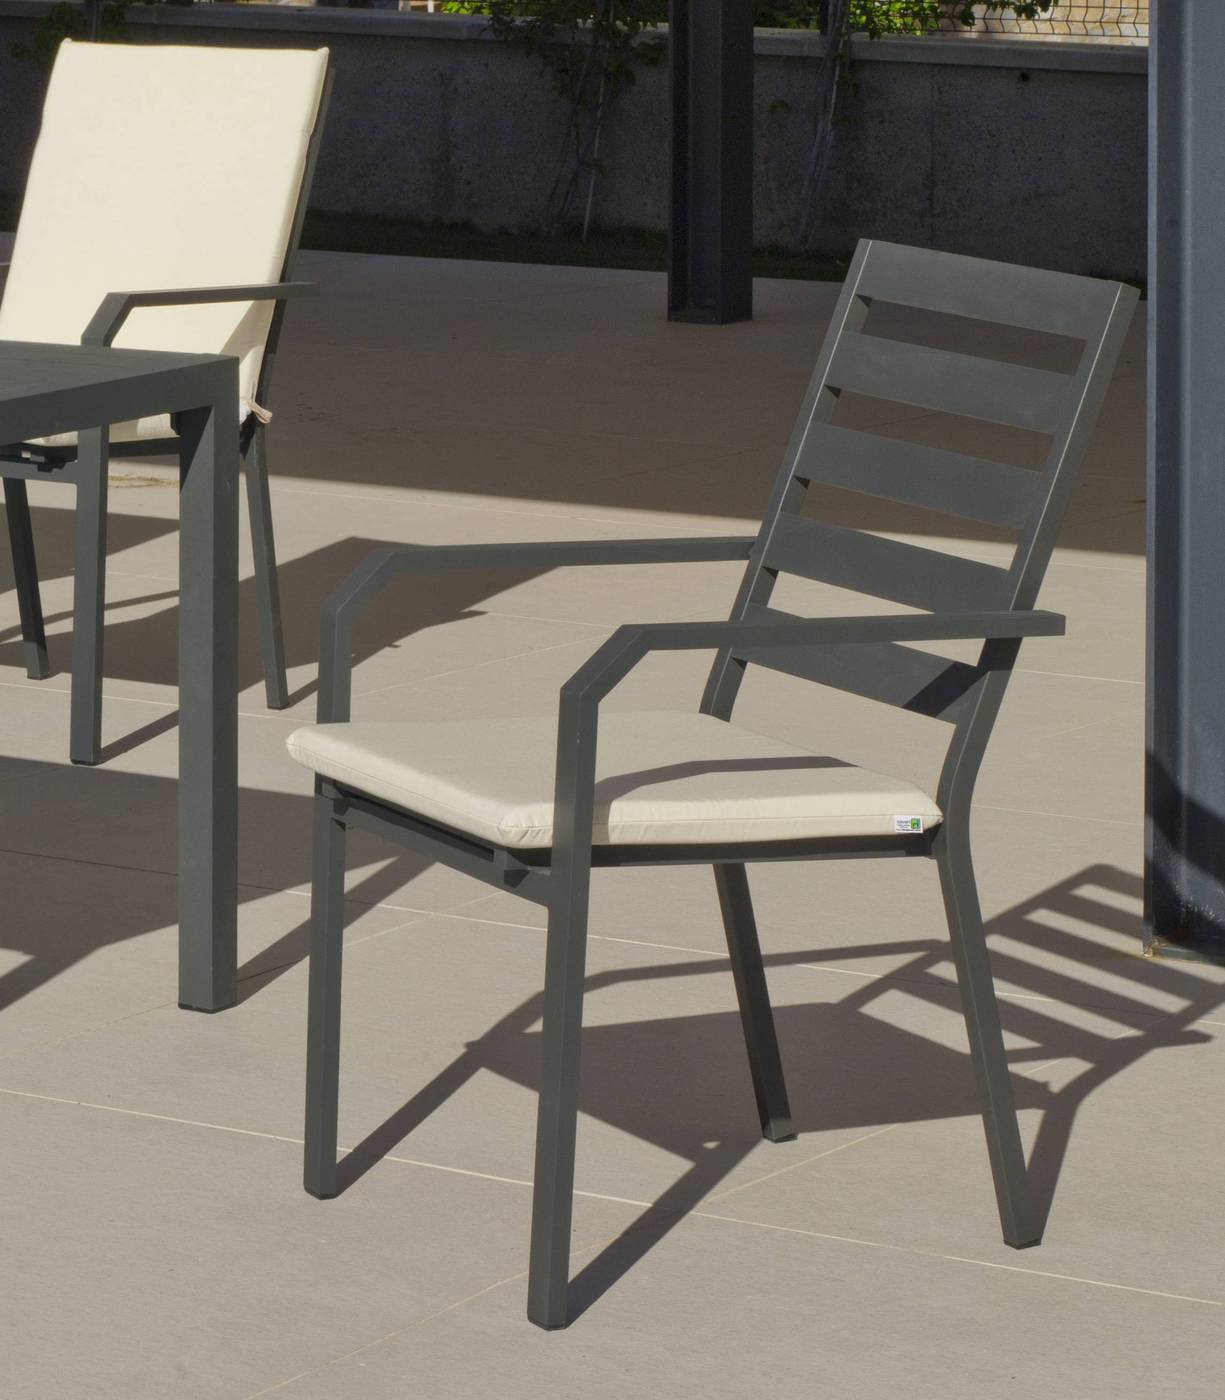 Set Aluminio Palma-Caravel 200-8 - Conjunto aluminio luxe: Mesa rectangular 200 cm + 8 sillones. Disponible en color blanco, antracita, champagne, plata o marrón.